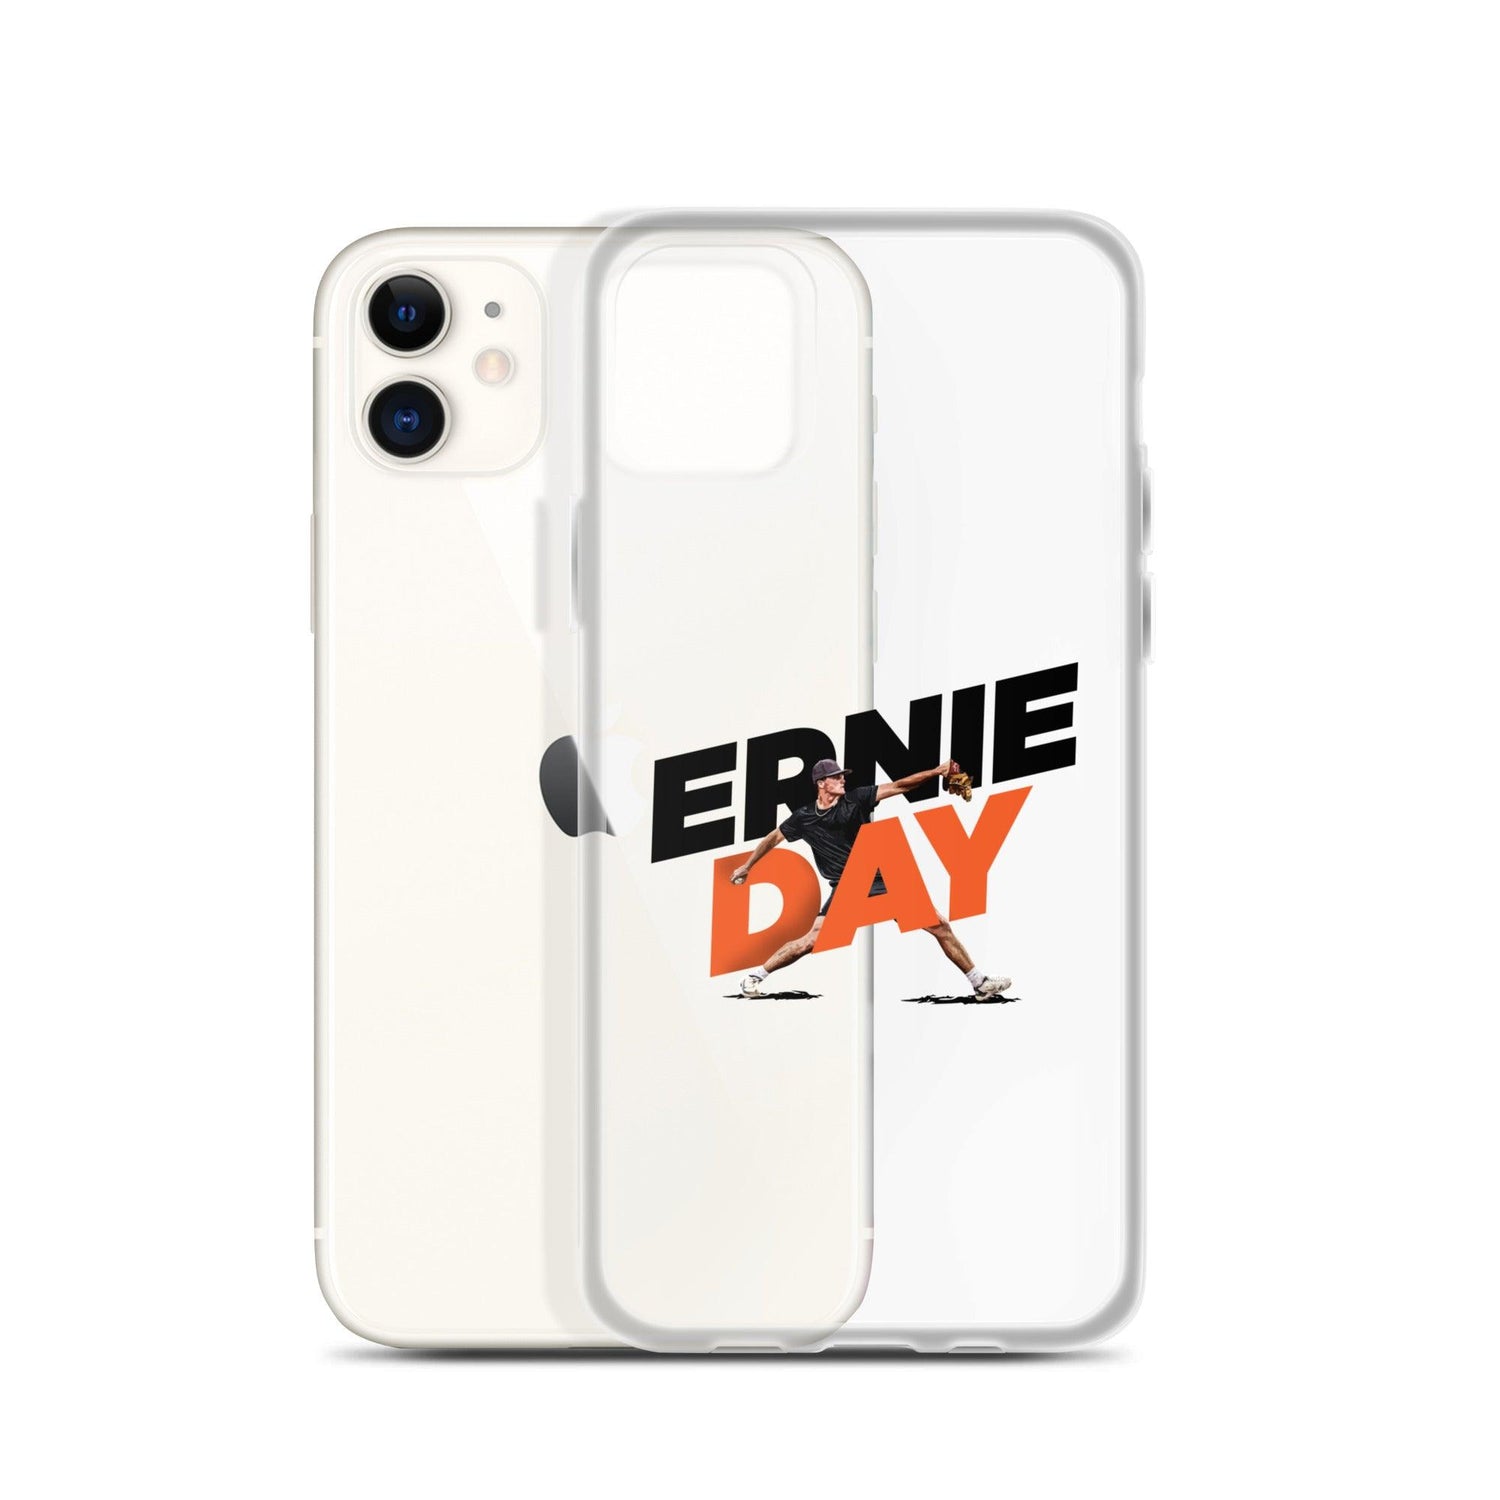 Ernie Day "Gameday" iPhone Case - Fan Arch